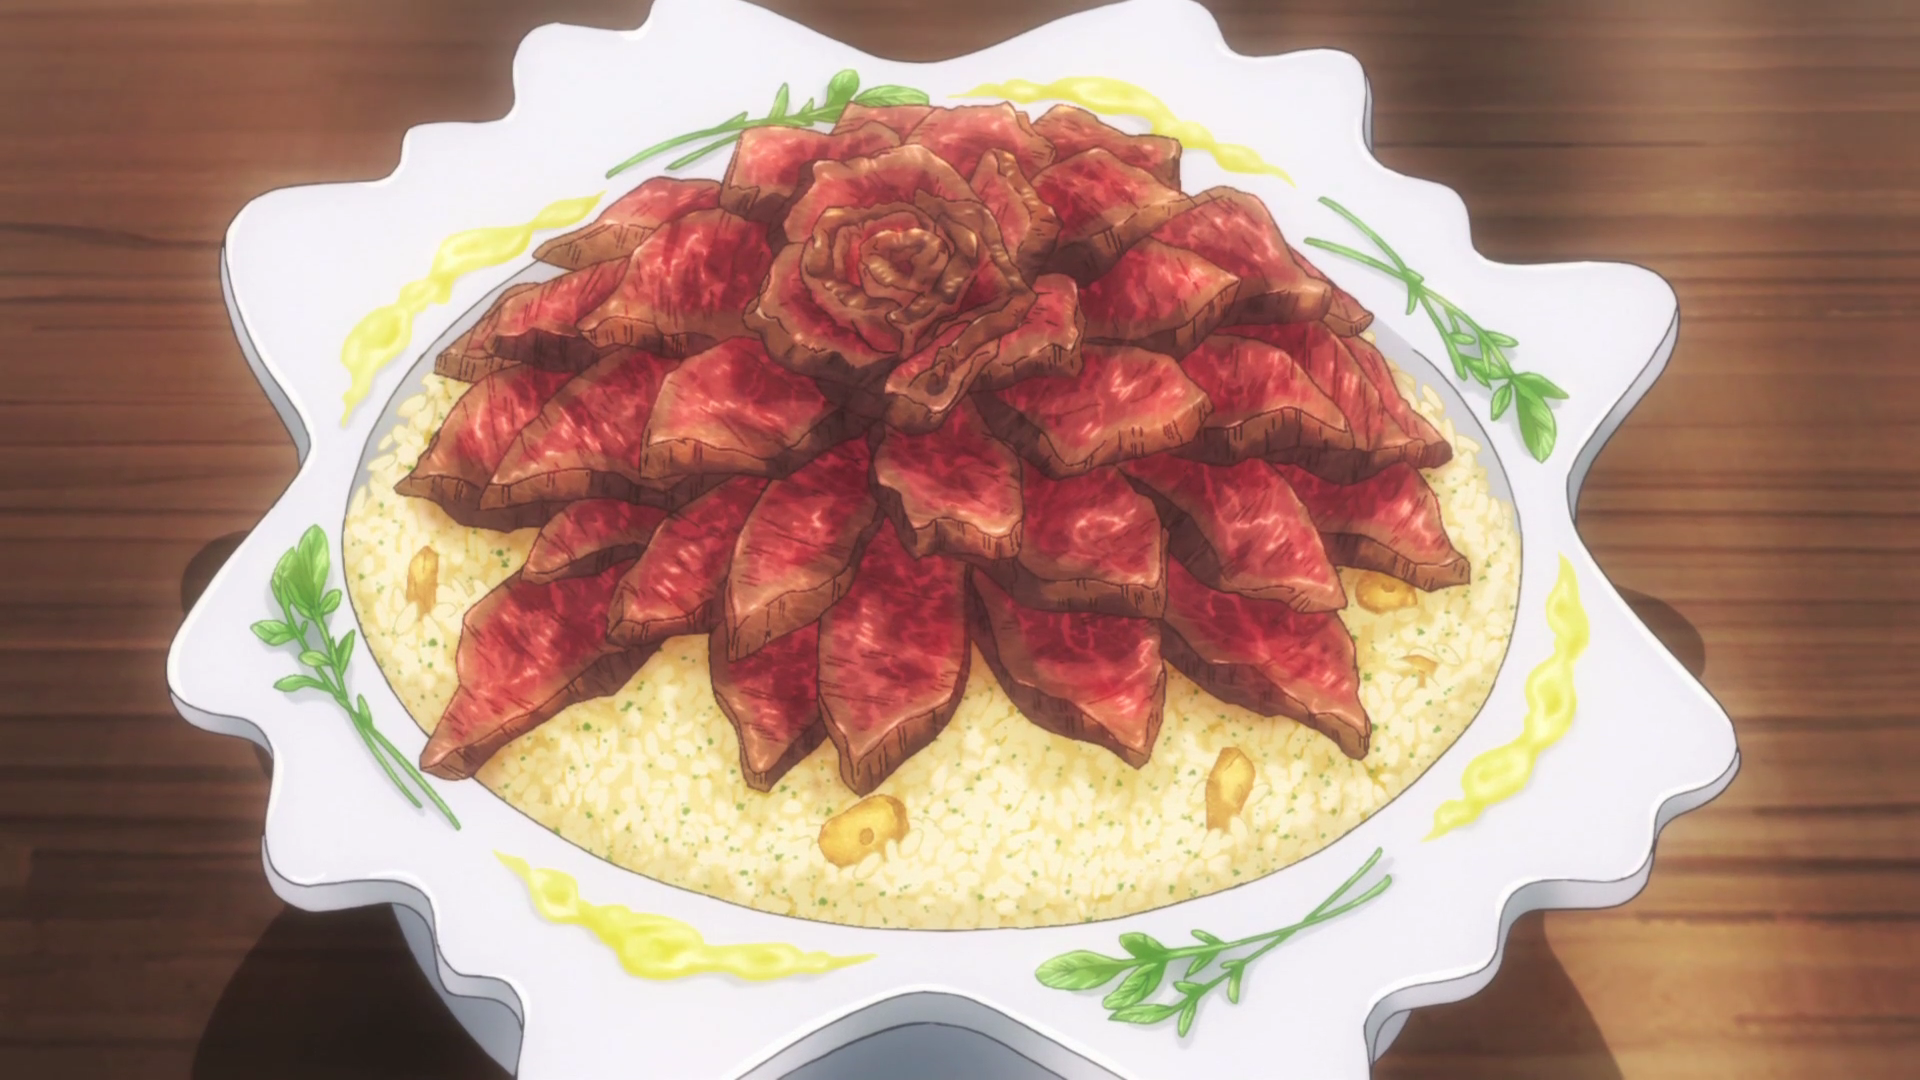 Food Wars! Review • Anime UK News